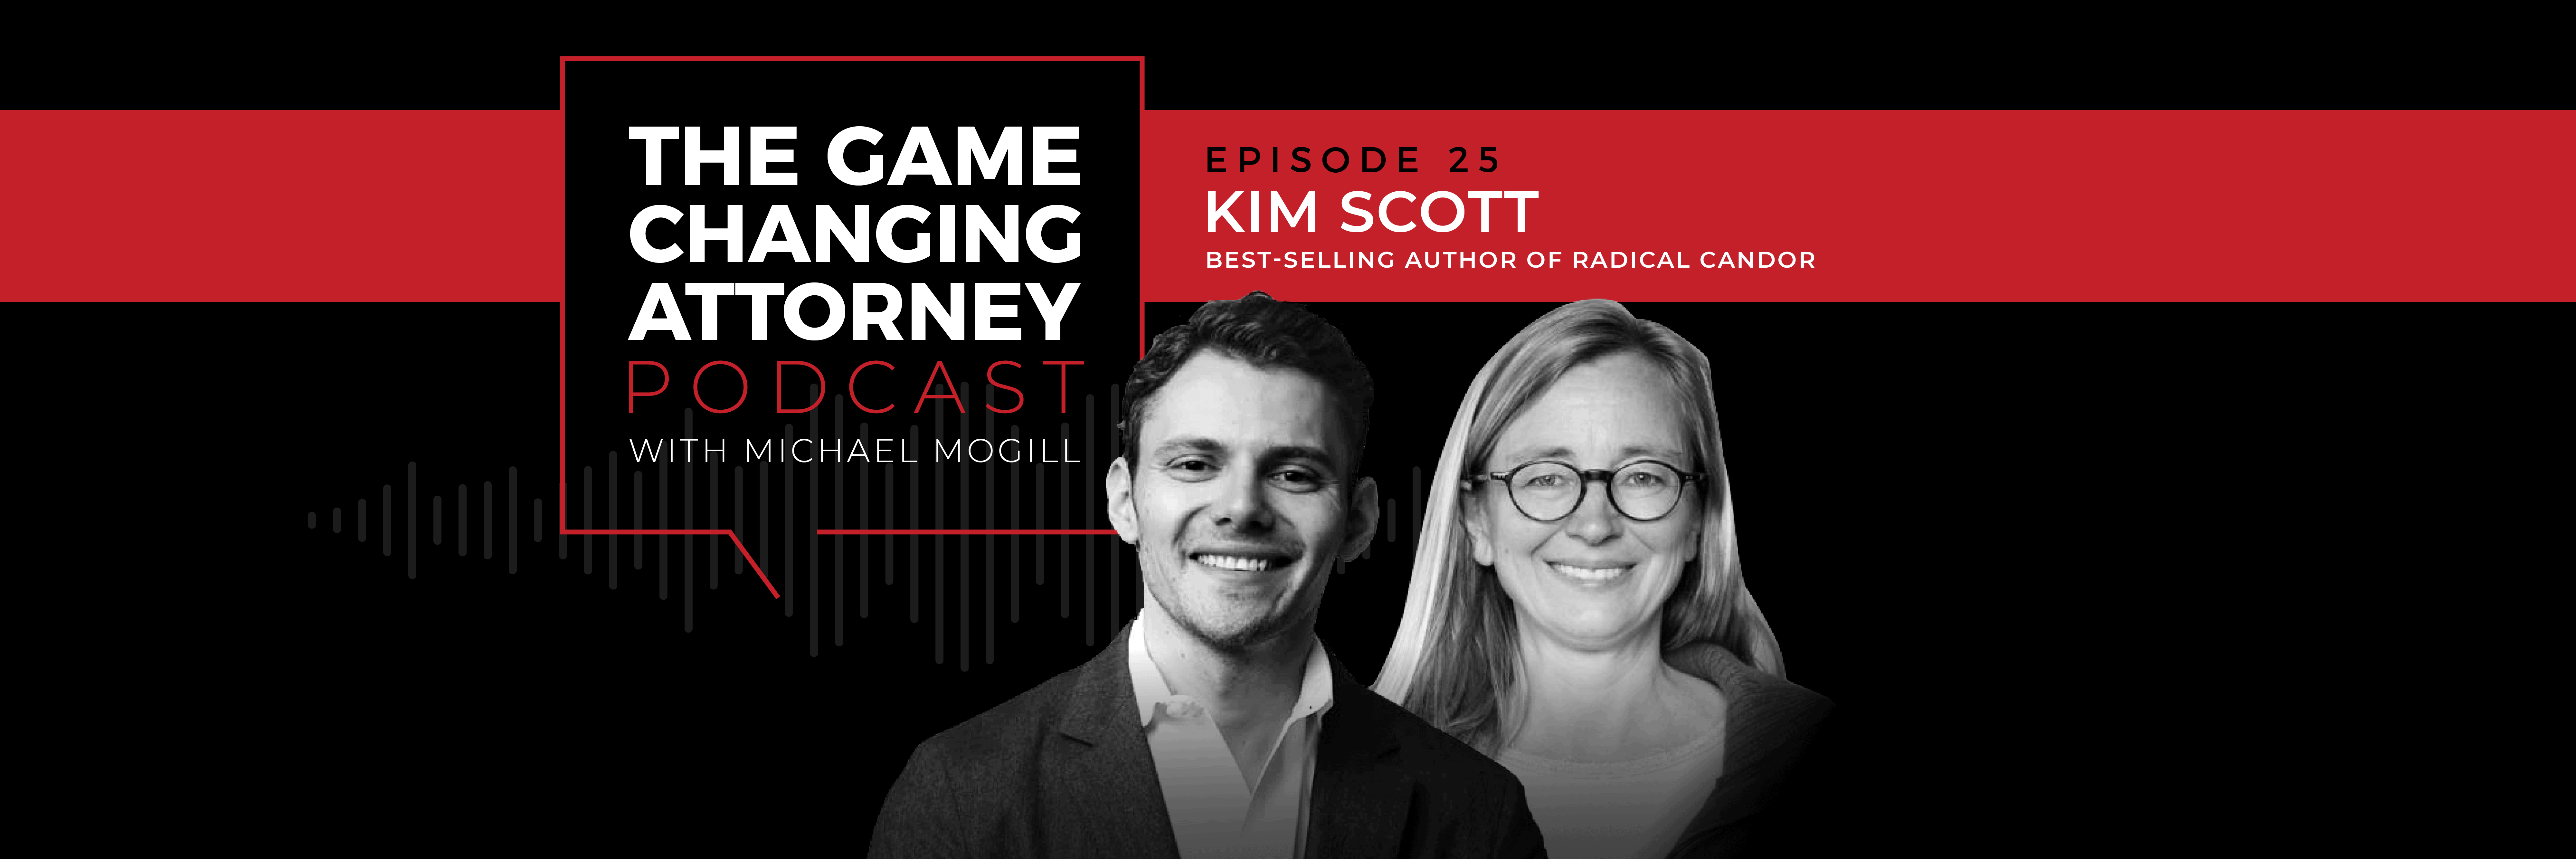 Kim Scott - The Game Changing Attorney Podcast - Desktop